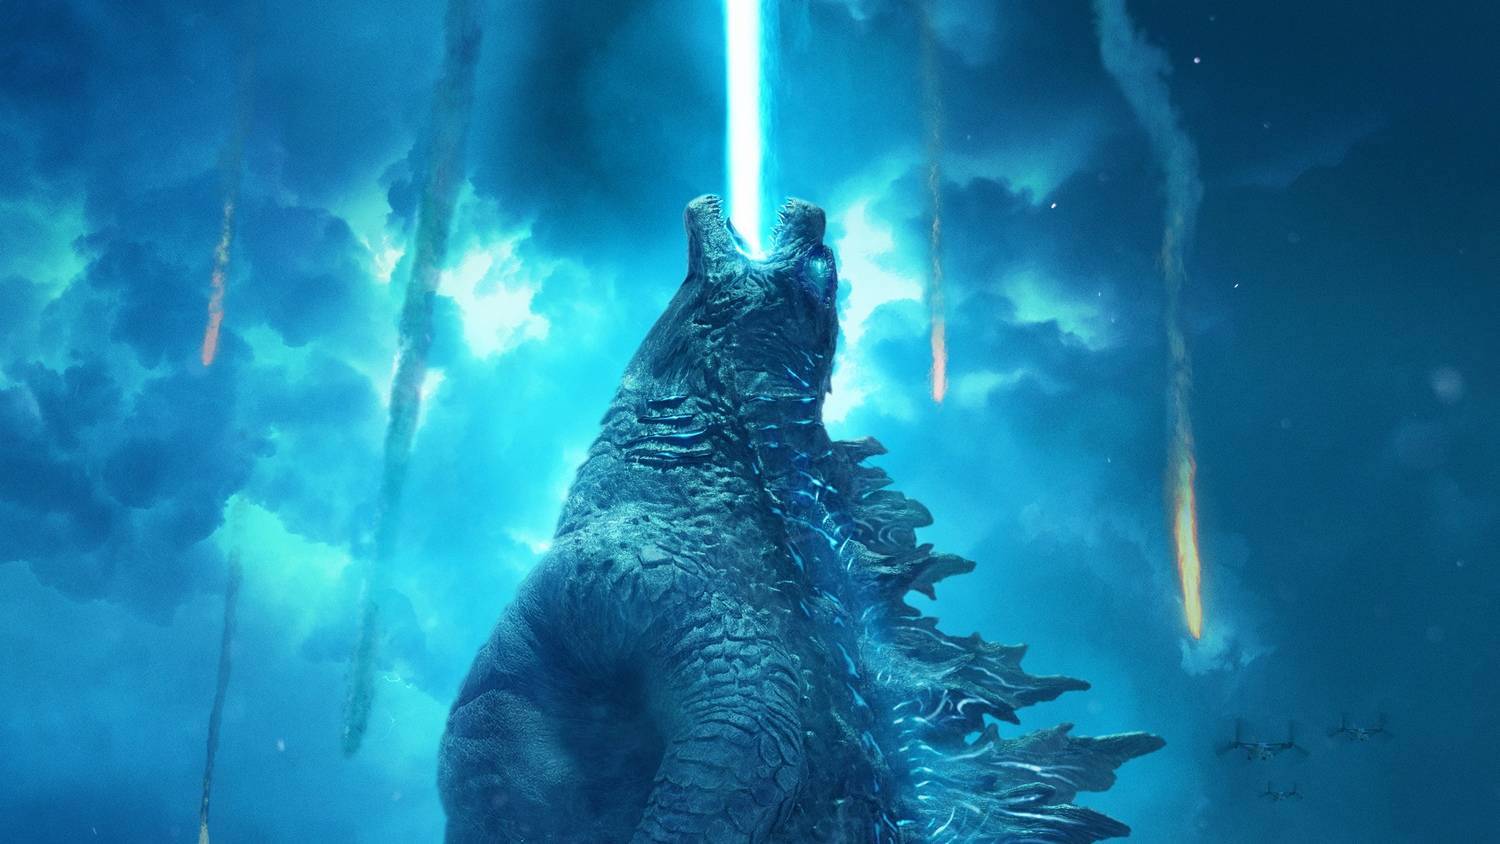 Should Godzilla Have Died A Villain?